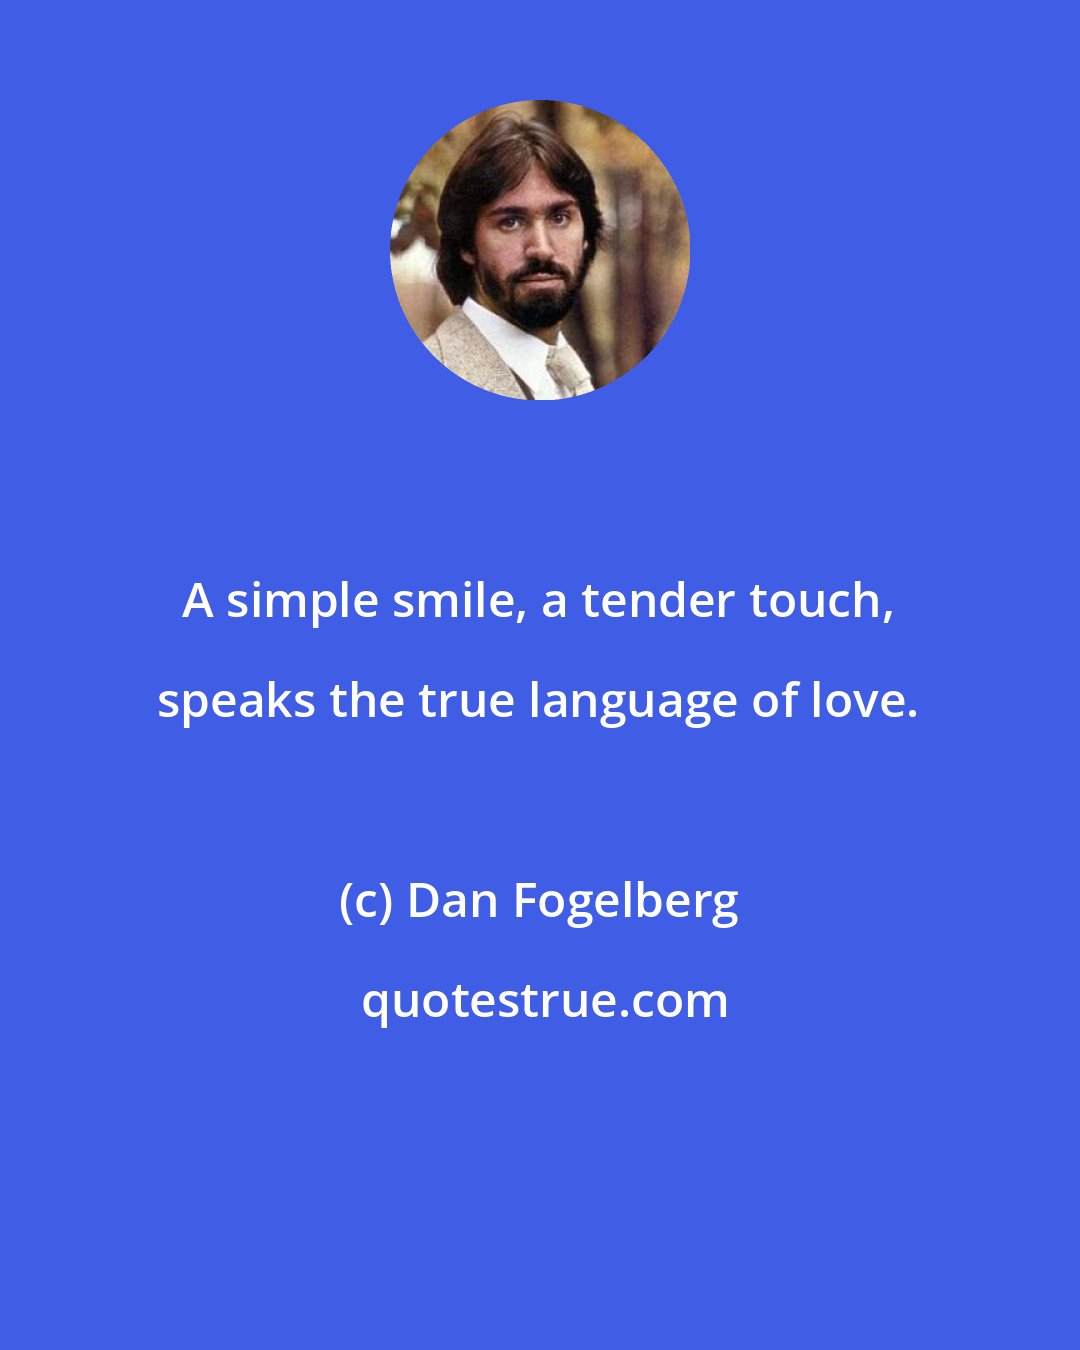 Dan Fogelberg: A simple smile, a tender touch, speaks the true language of love.